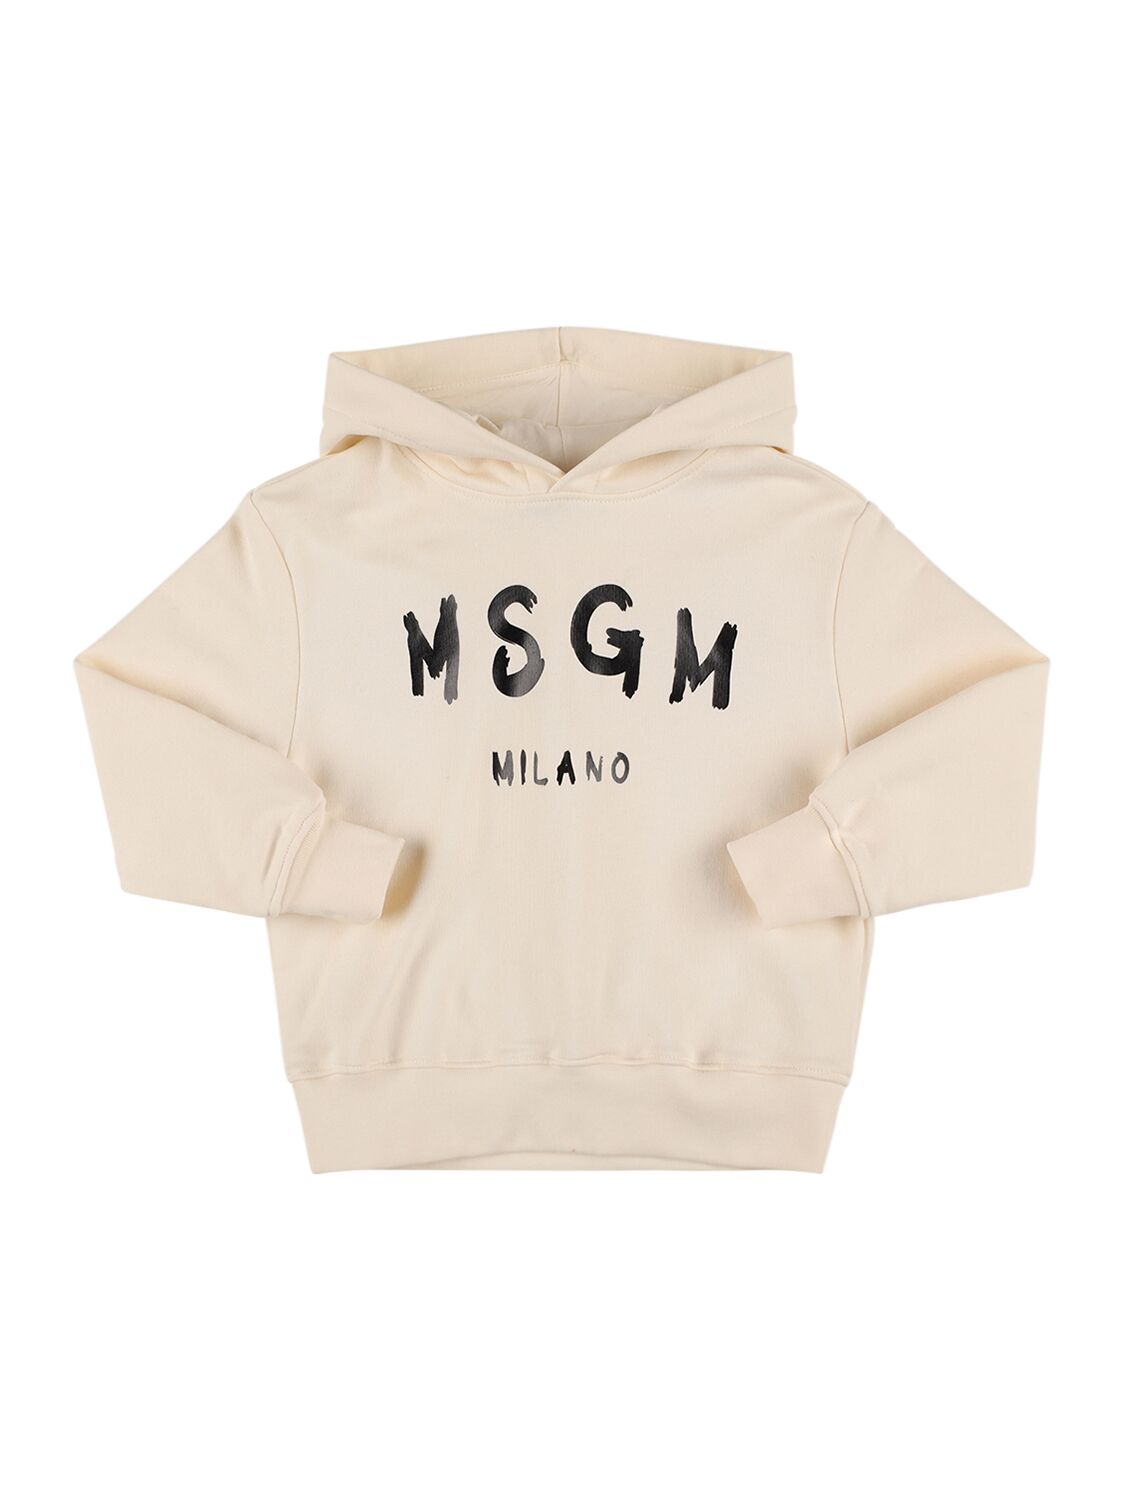 Msgm Kids' Printed Logo Hooded Sweatshirt In Off White